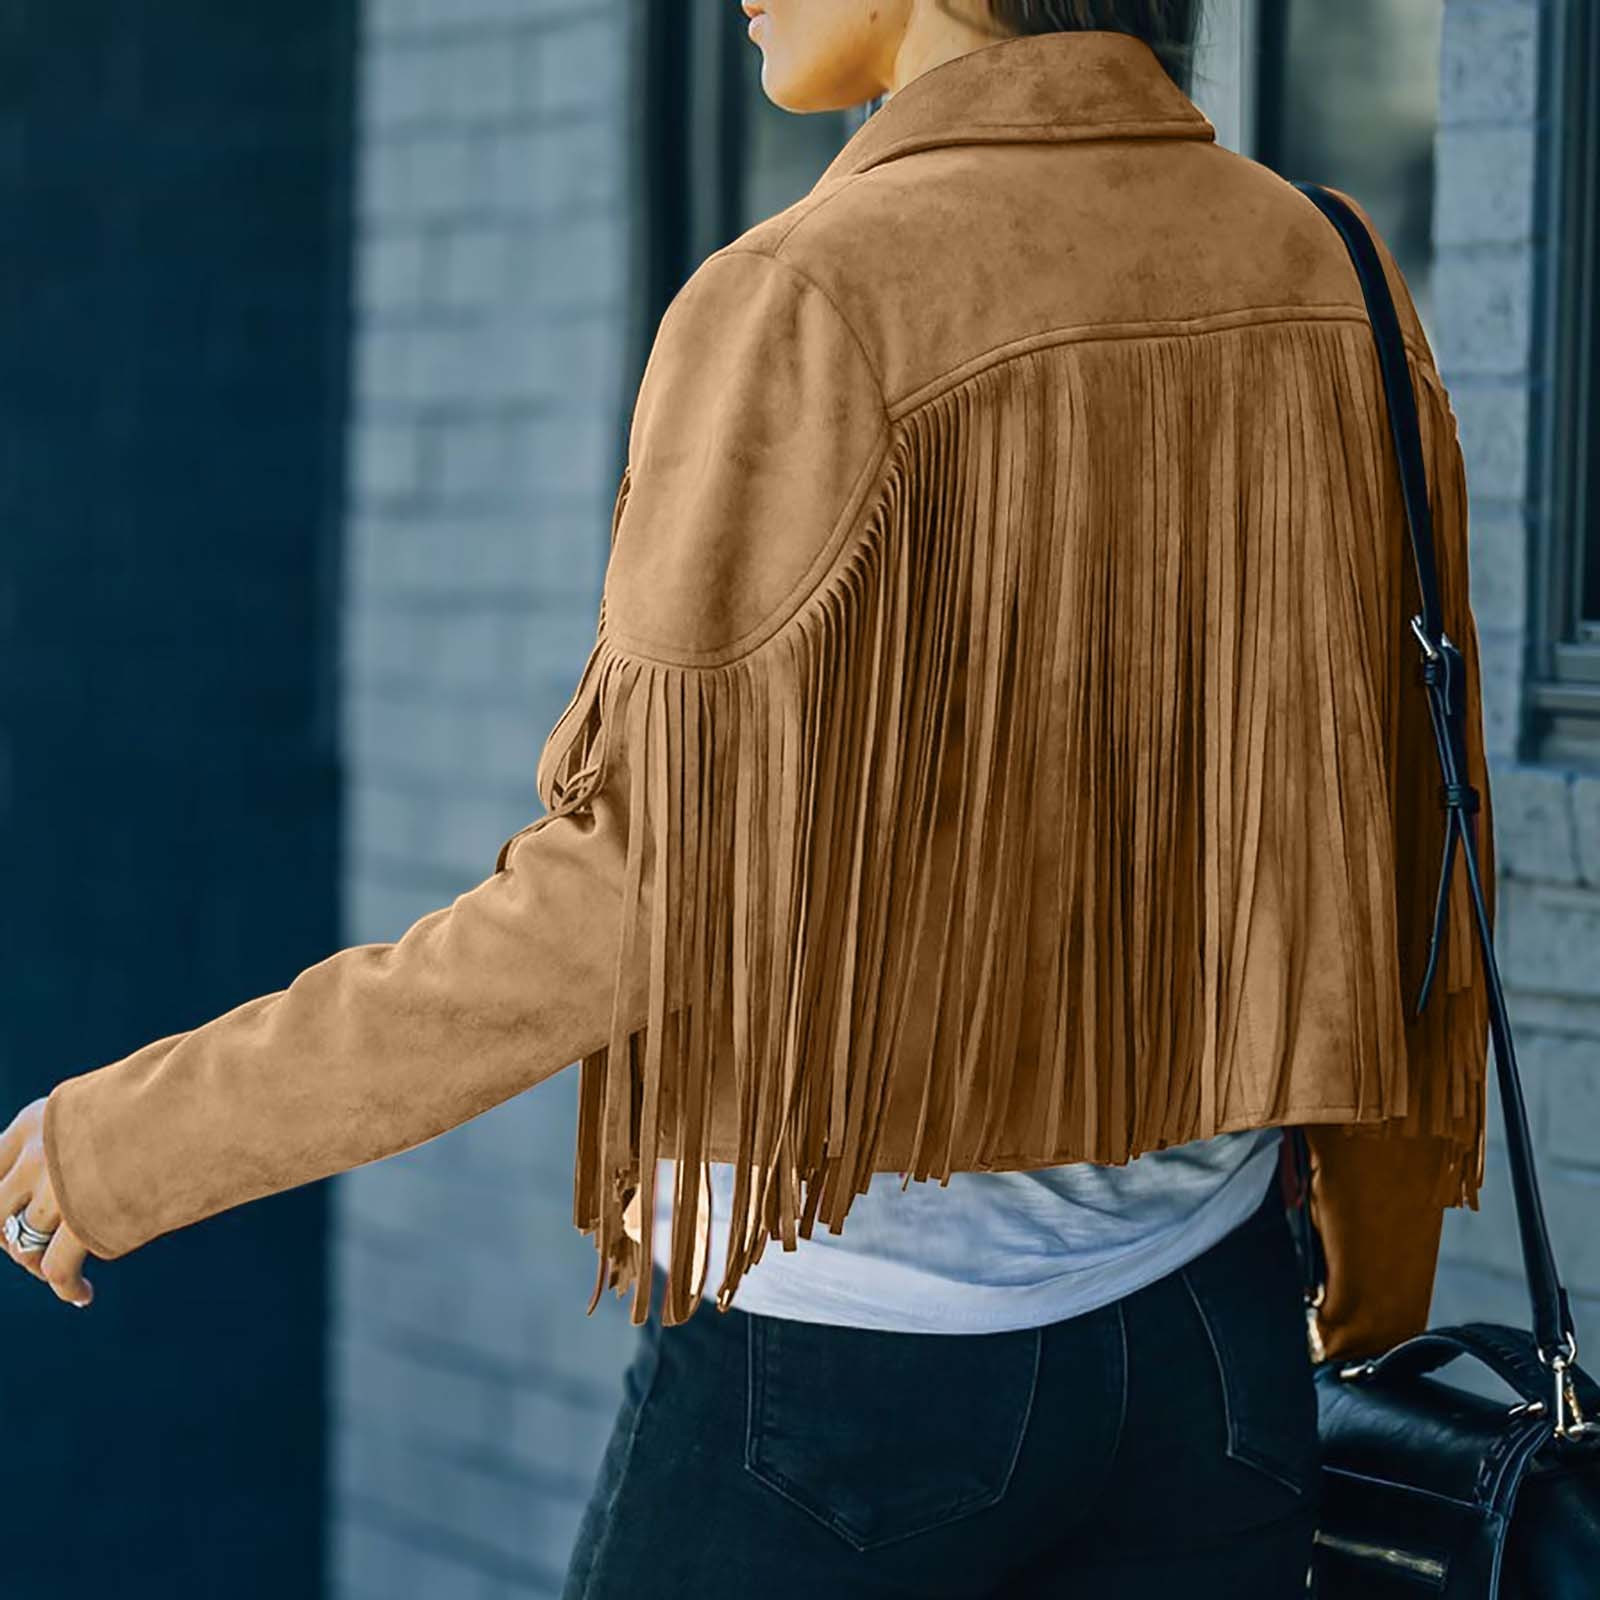 Women Vintage Faux Suede Tassel Cropped Jacket Long Sleeve Fringe Leather Coat Hippie Motorcycle Biker Jackets Tops - image 4 of 9